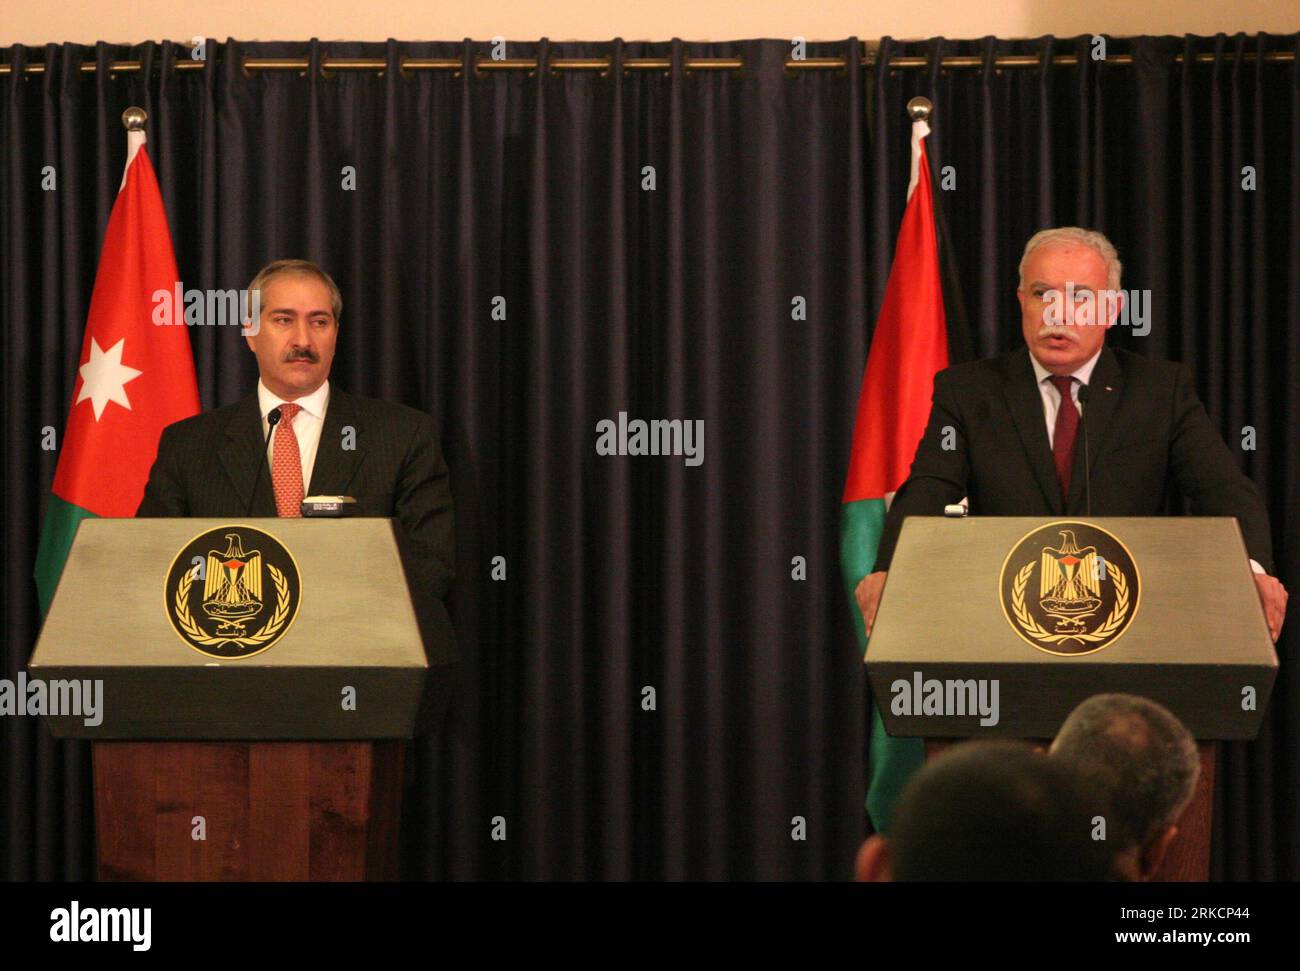 Bildnummer: 54790411 Datum: 06.01.2011 Copyright: imago/Xinhua (110107)-- BETLEMME, 7 gennaio 2011 (Xinhua) -- il ministro degli Esteri palestinese Riyad al-Malki (R) tiene una conferenza stampa congiunta con il suo omologo giordano Nasser Judeh nella città di Betlemme in Cisgiordania il 6 gennaio 2011. (Xinhua/Mamoun Wazwaz)(fb) MIDEAST-PALESTINE-JORDAN-DIPLOMACY PUBLICATIONxNOTxINxCHN People Politik kbdig xcb 2011 quer premiumd Bildnummer 54790411 Data 06 01 2011 Copyright Imago XINHUA 110107 Betlemme 7 gennaio 2011 XINHUA Ministri degli Esteri PALESTINESI Riyad al Malki r tiene una conferenza stampa congiunta con HIS Foto Stock